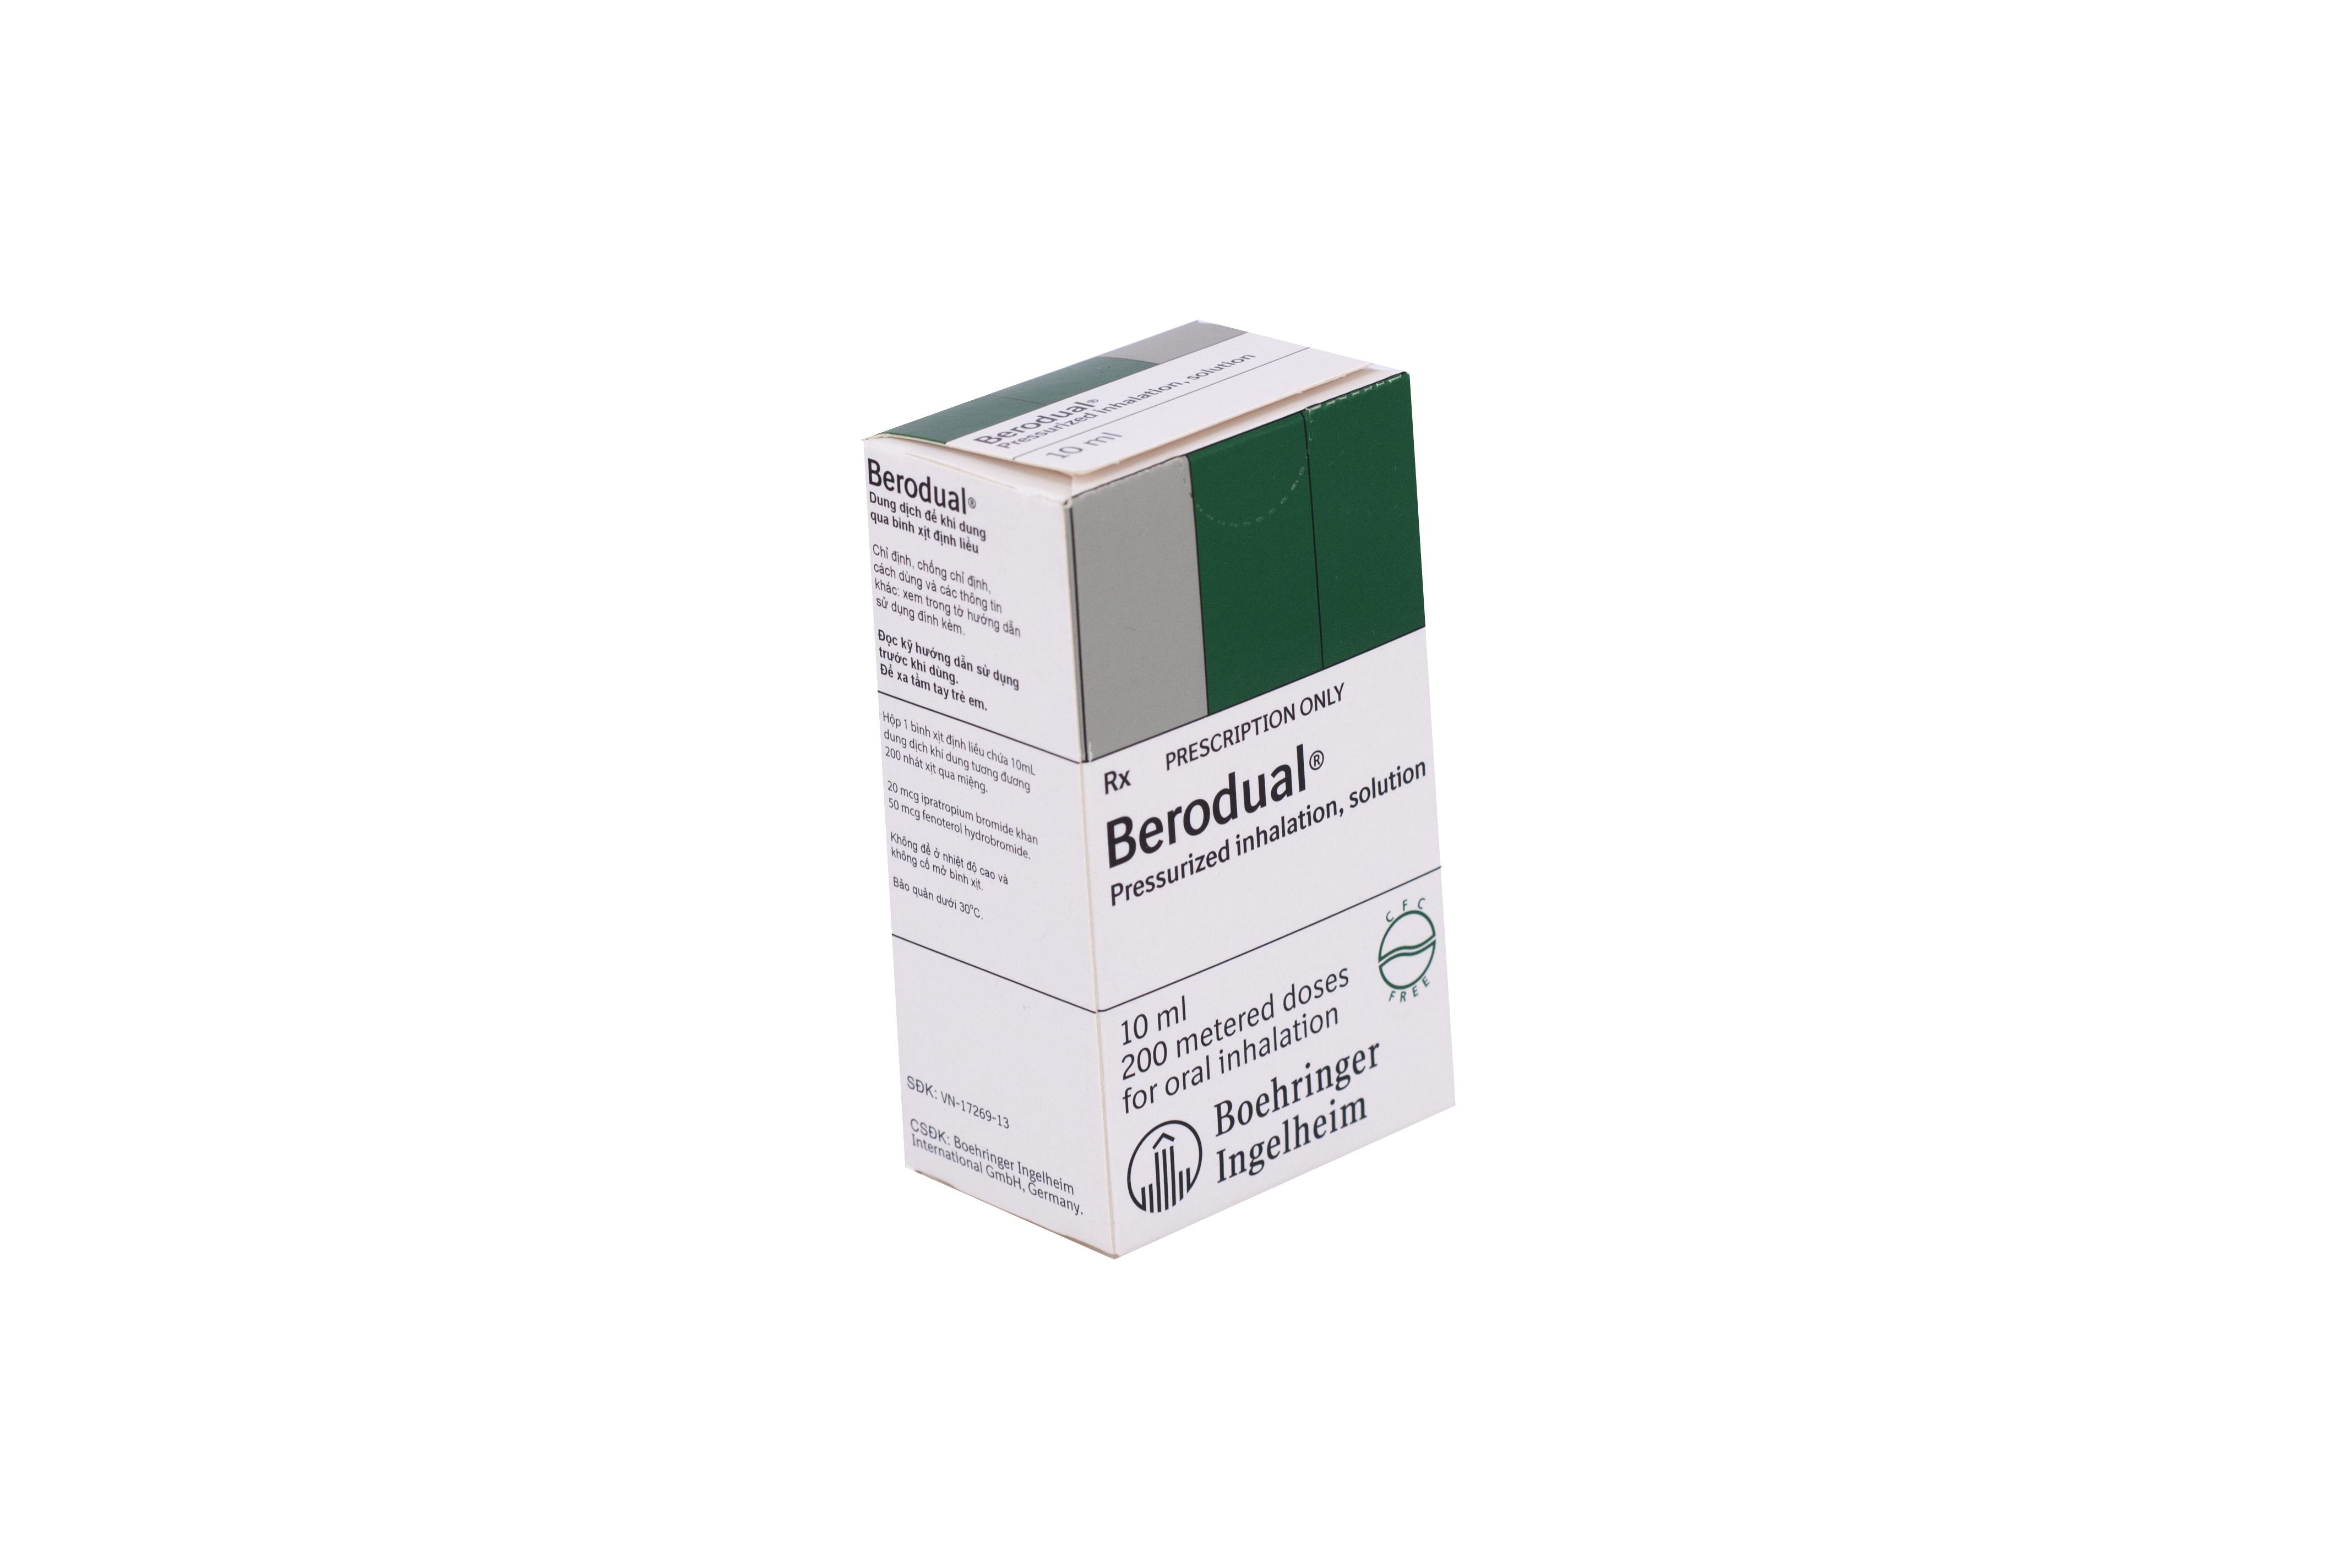 Berodual Xịt (Ipratropium, Fenoterol) Boehringer Ingelheim (C/10ml)